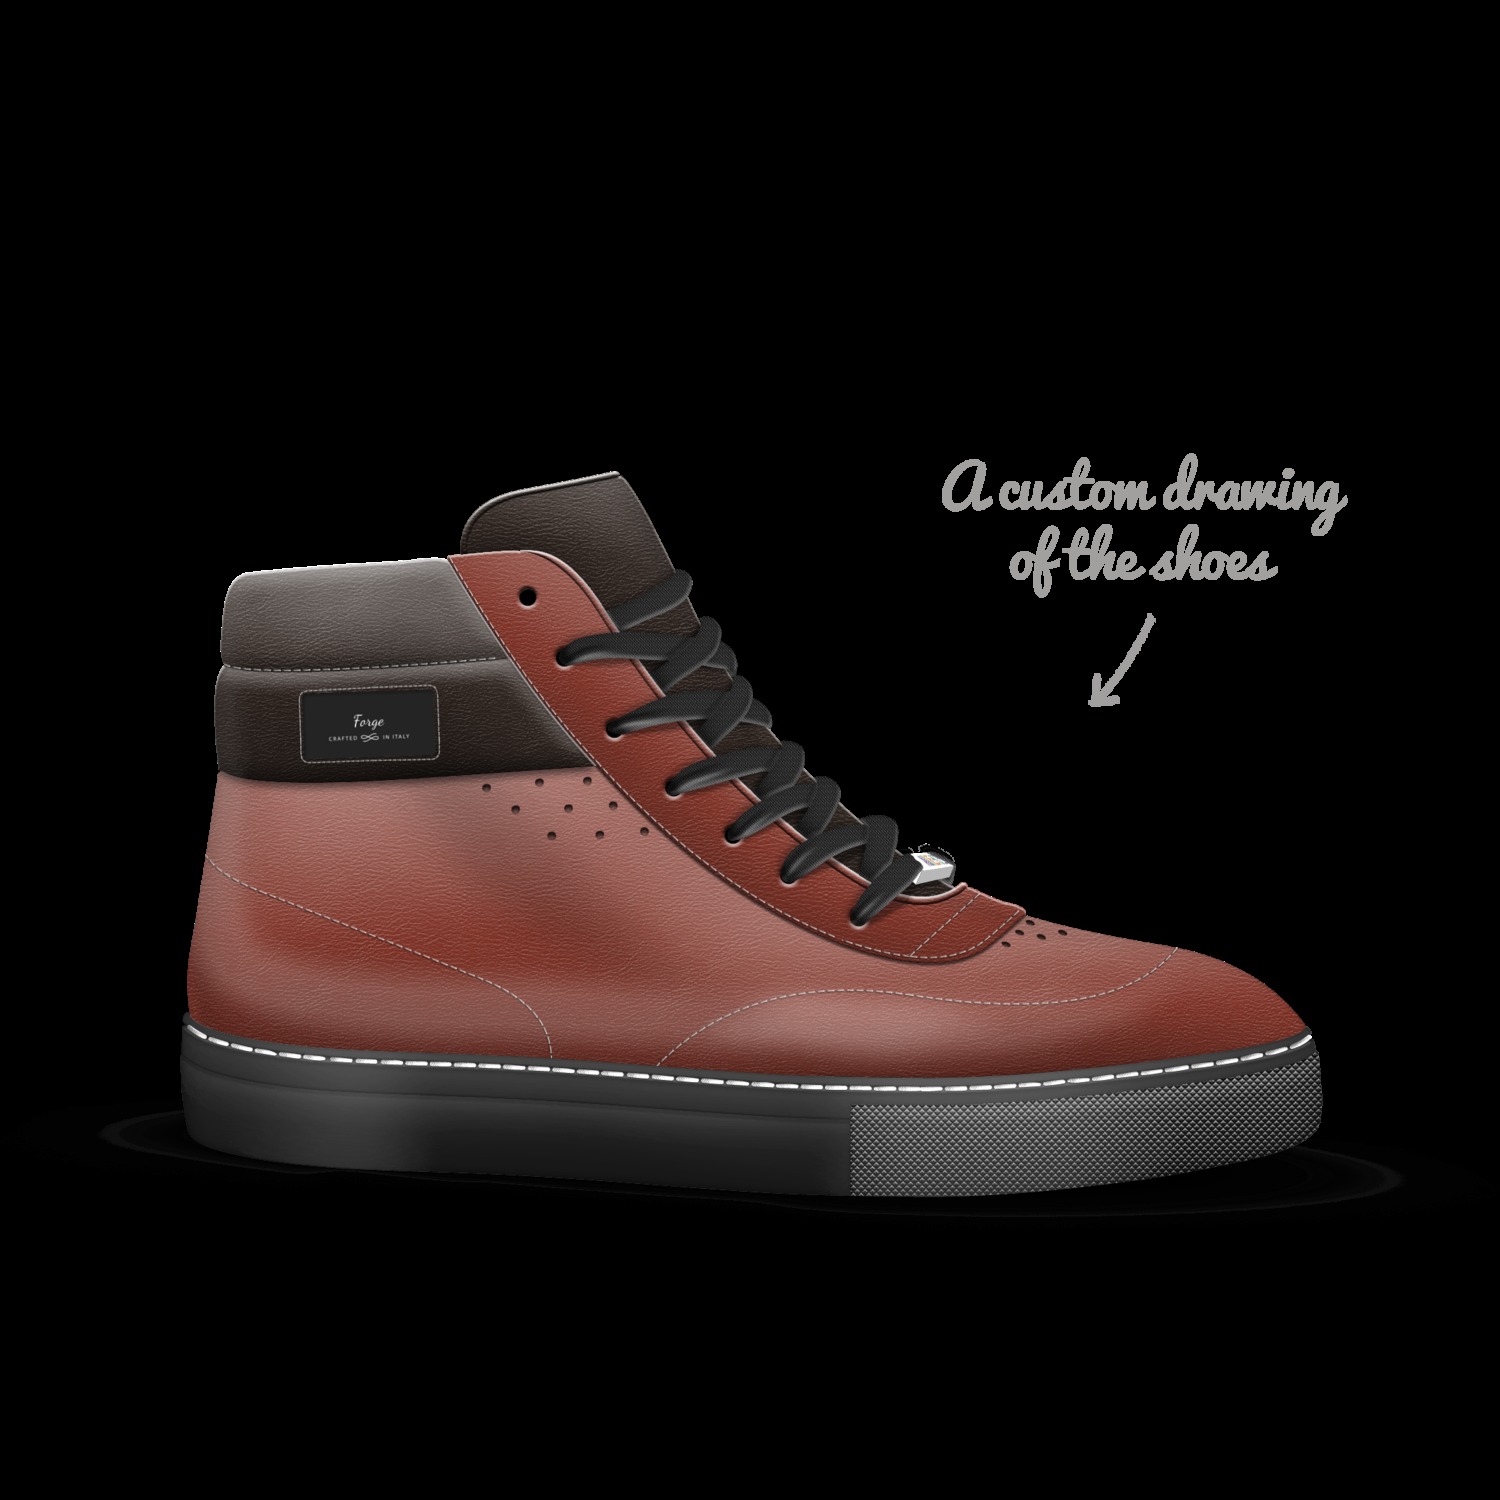 A Custom Shoe concept by Esteban Torres